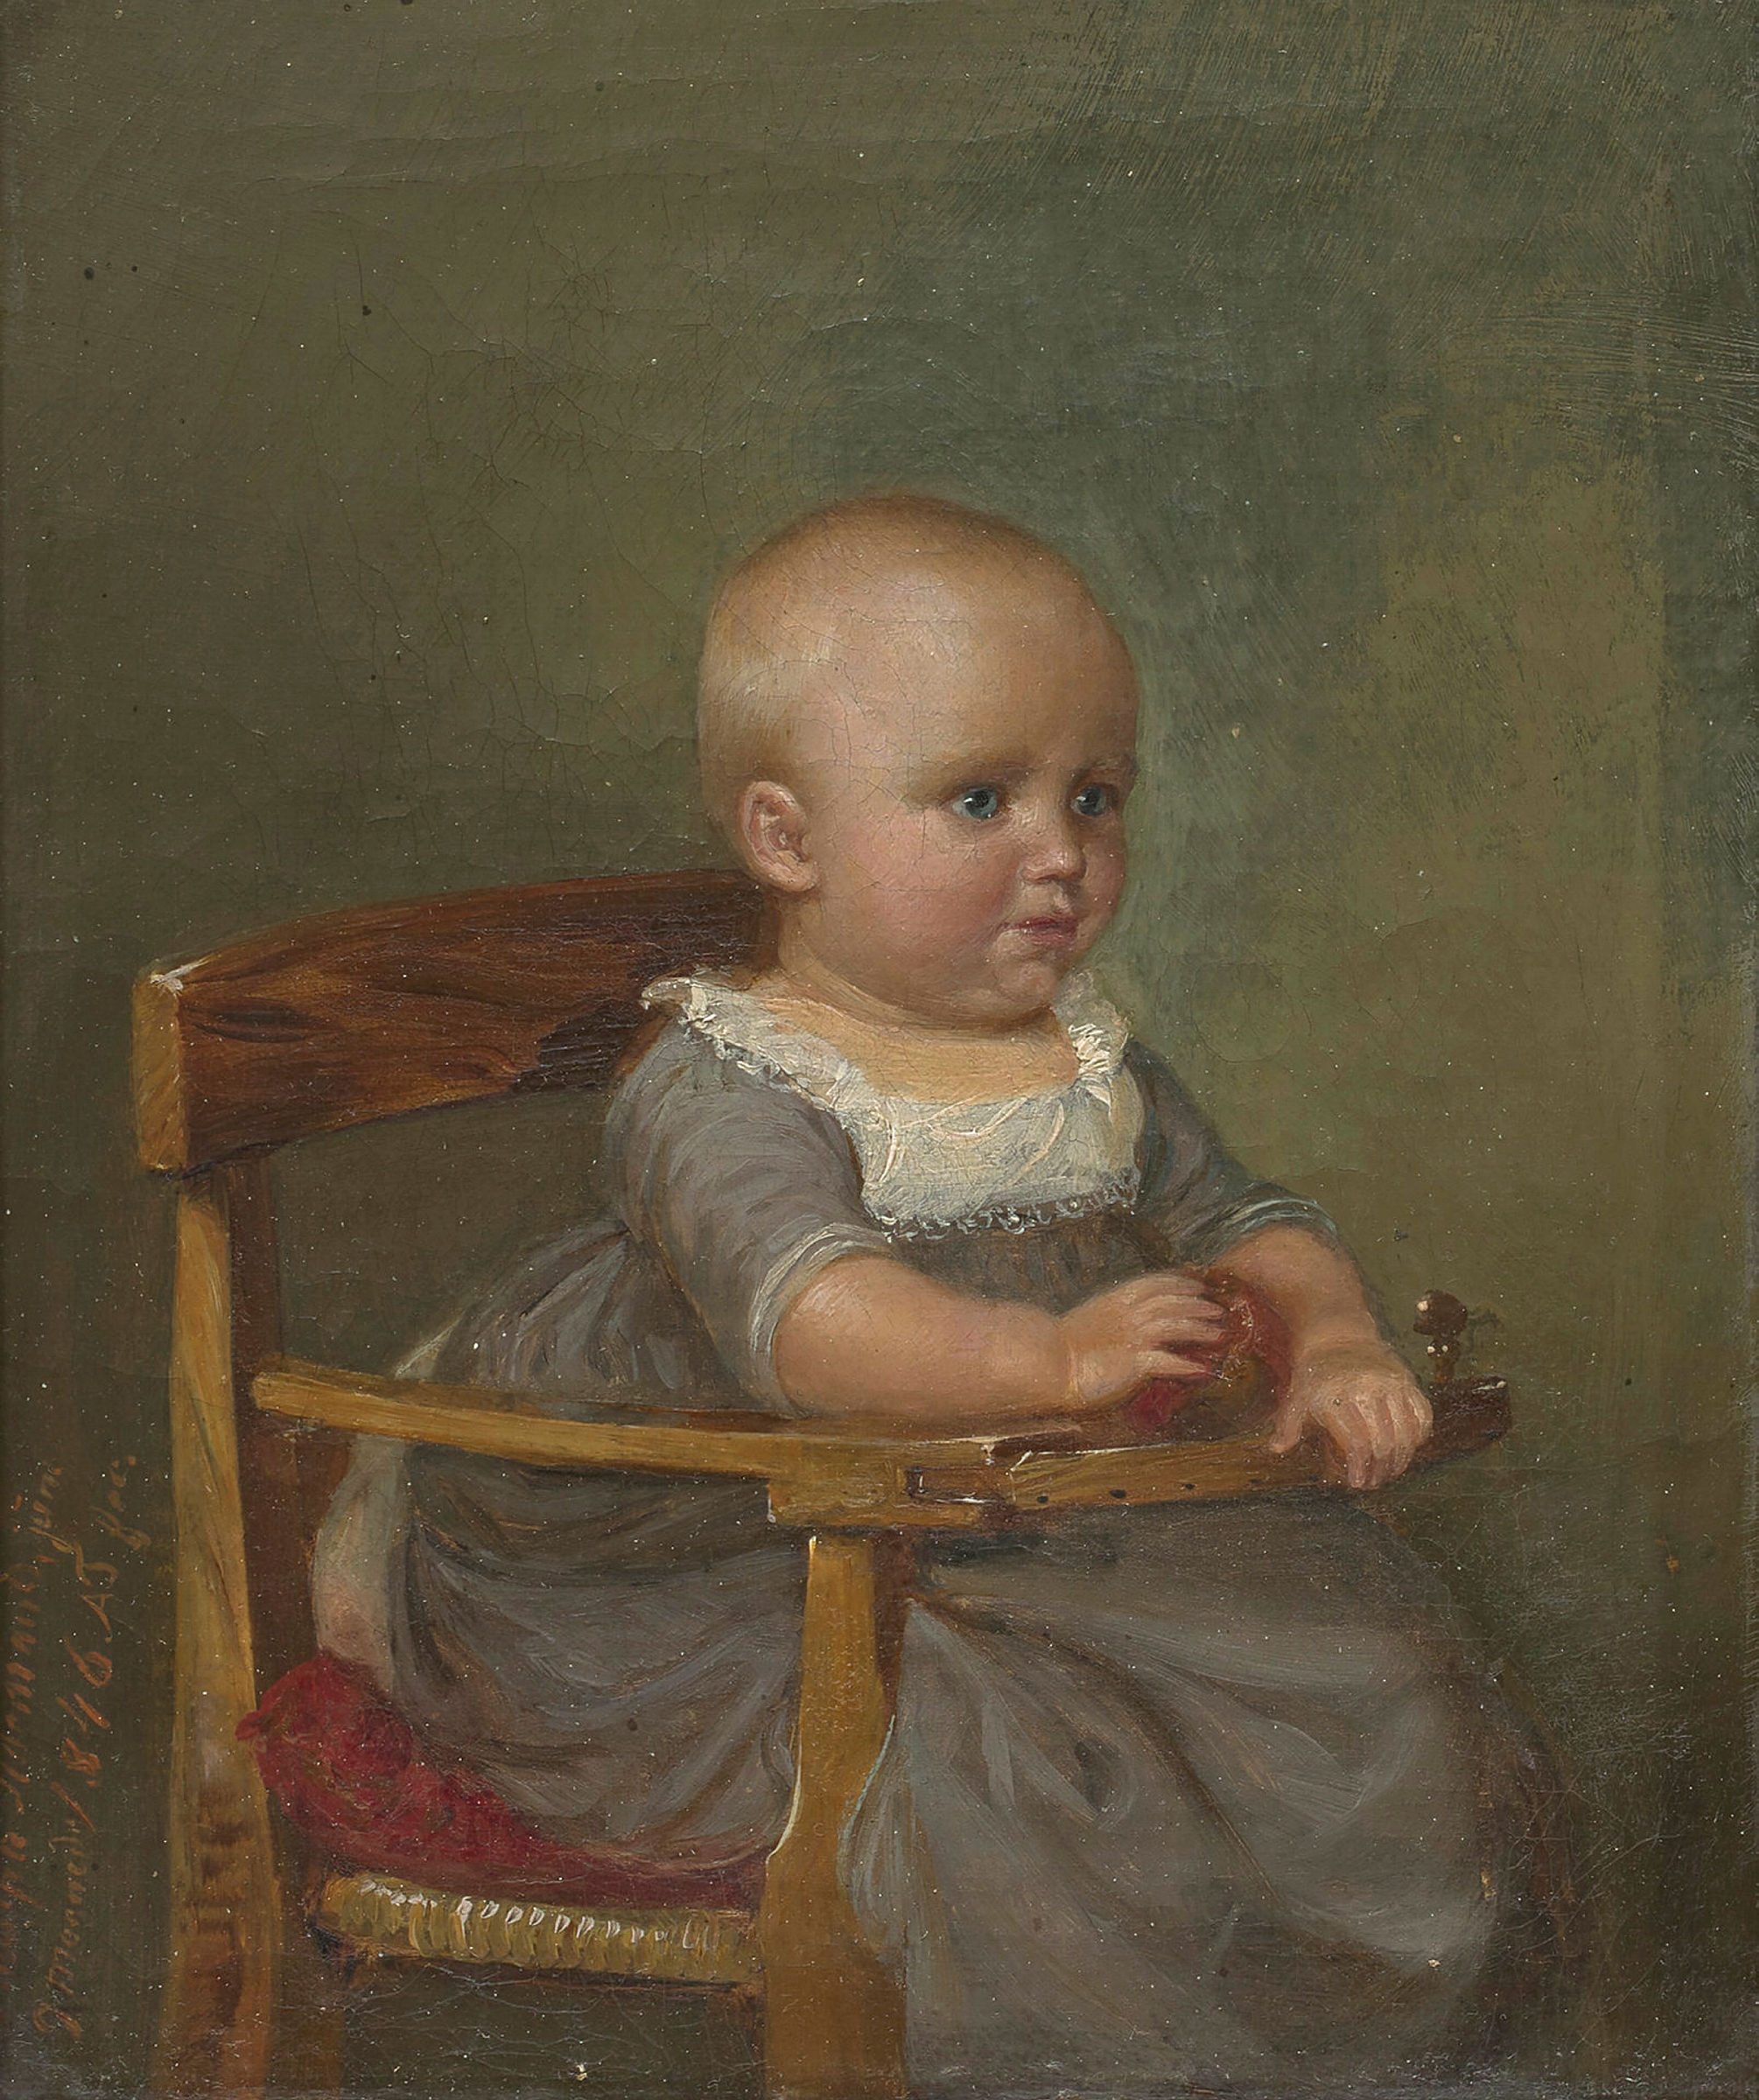 Adolph Tidemand jr. 9 maaneder by Adolph Tidemand, 1846